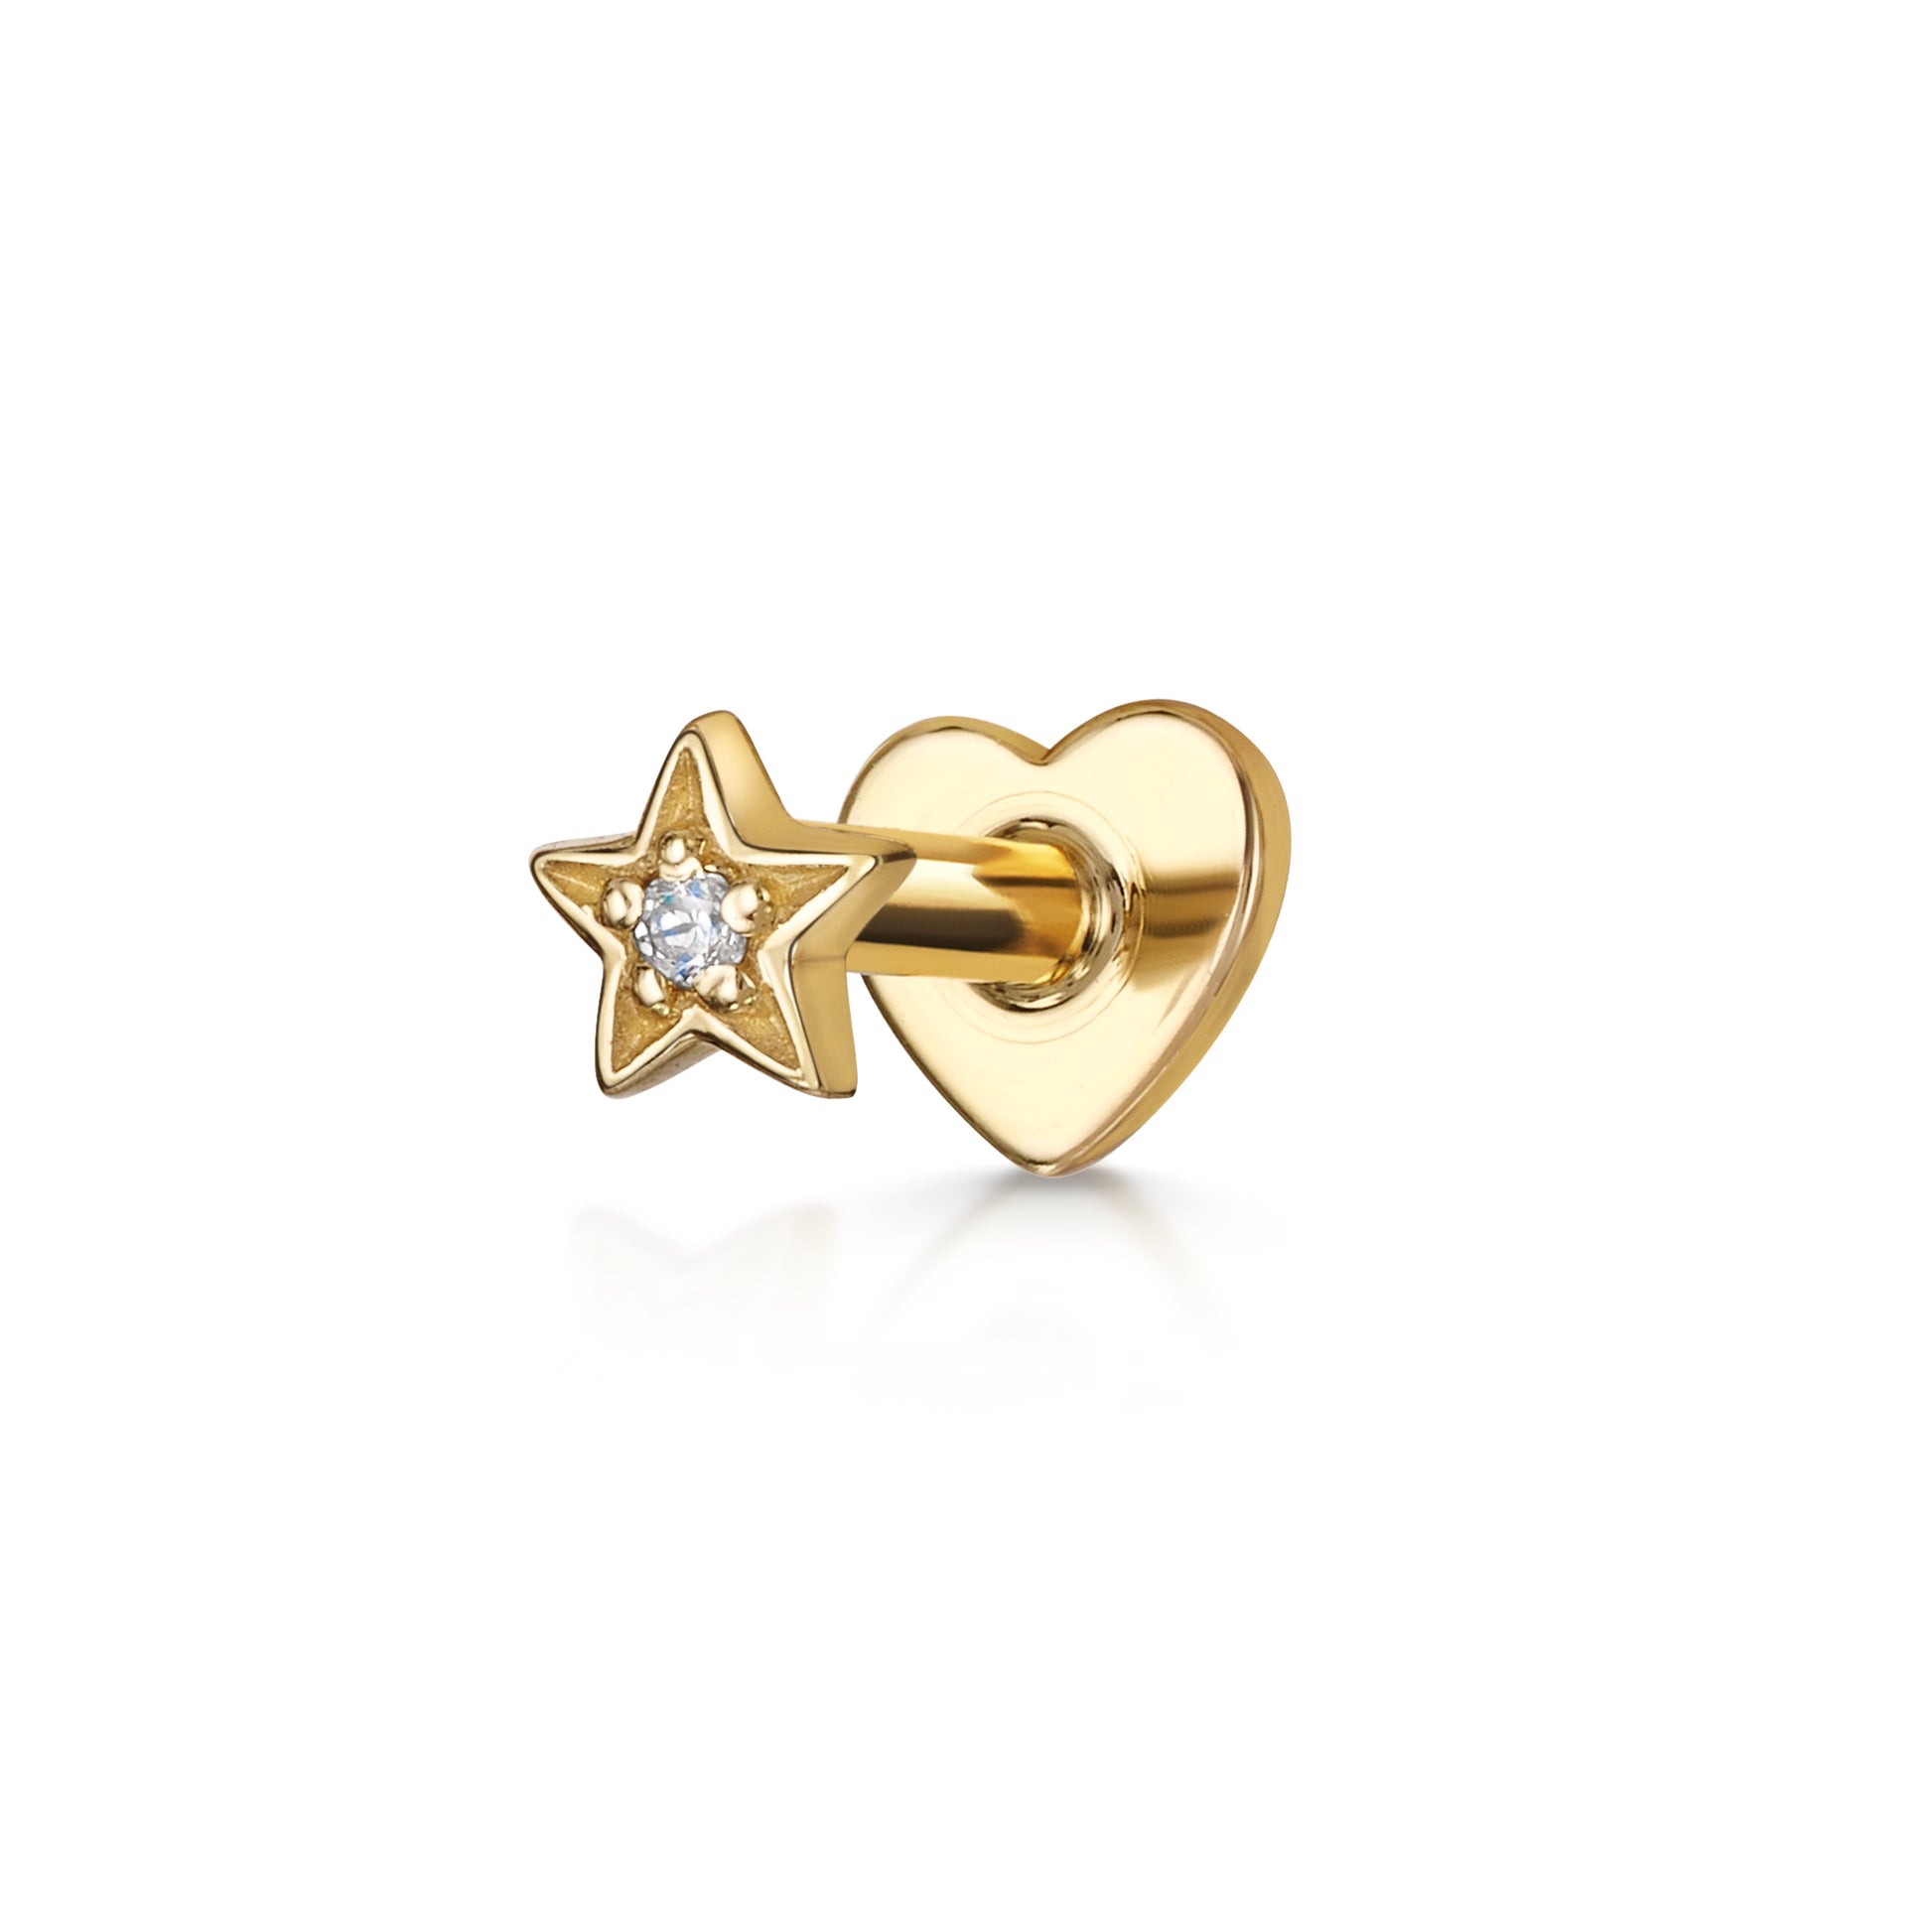 14k solid yellow gold Nova star flat back labret stud earring 8mm - LAURA BOND jewellery